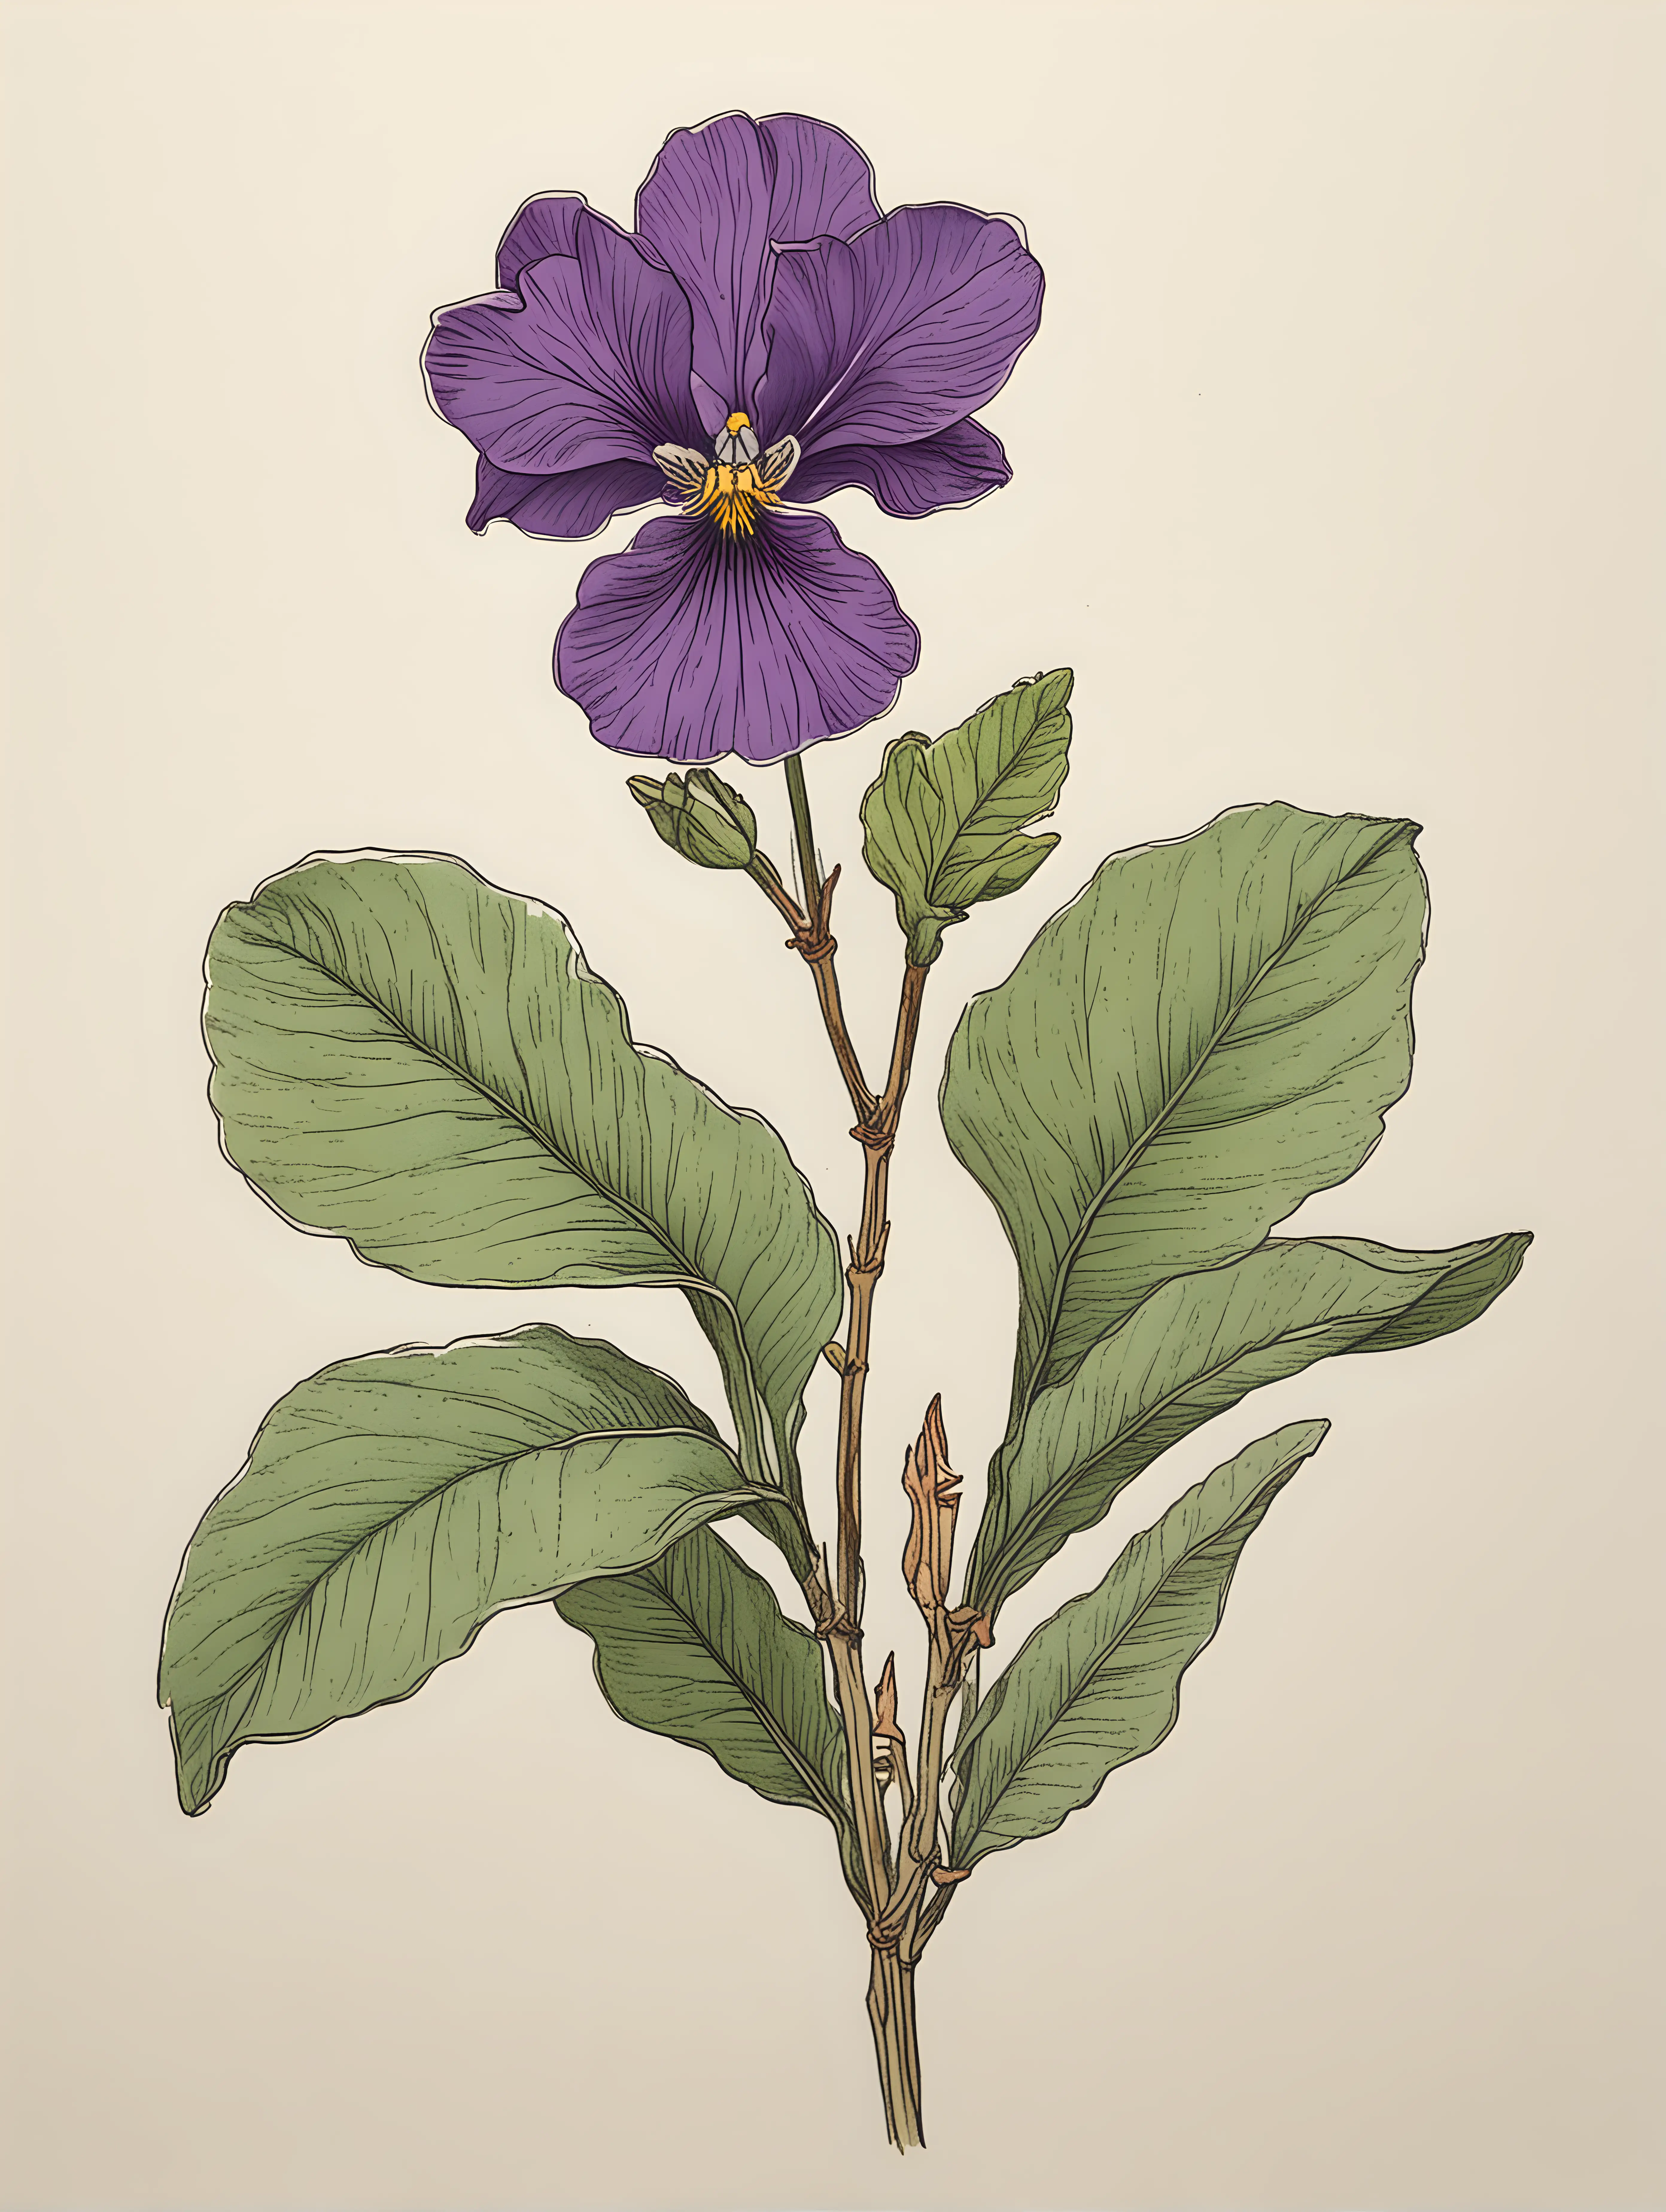 Botanical Illustration of a Violet with Lush Leaves in John Audubon Style